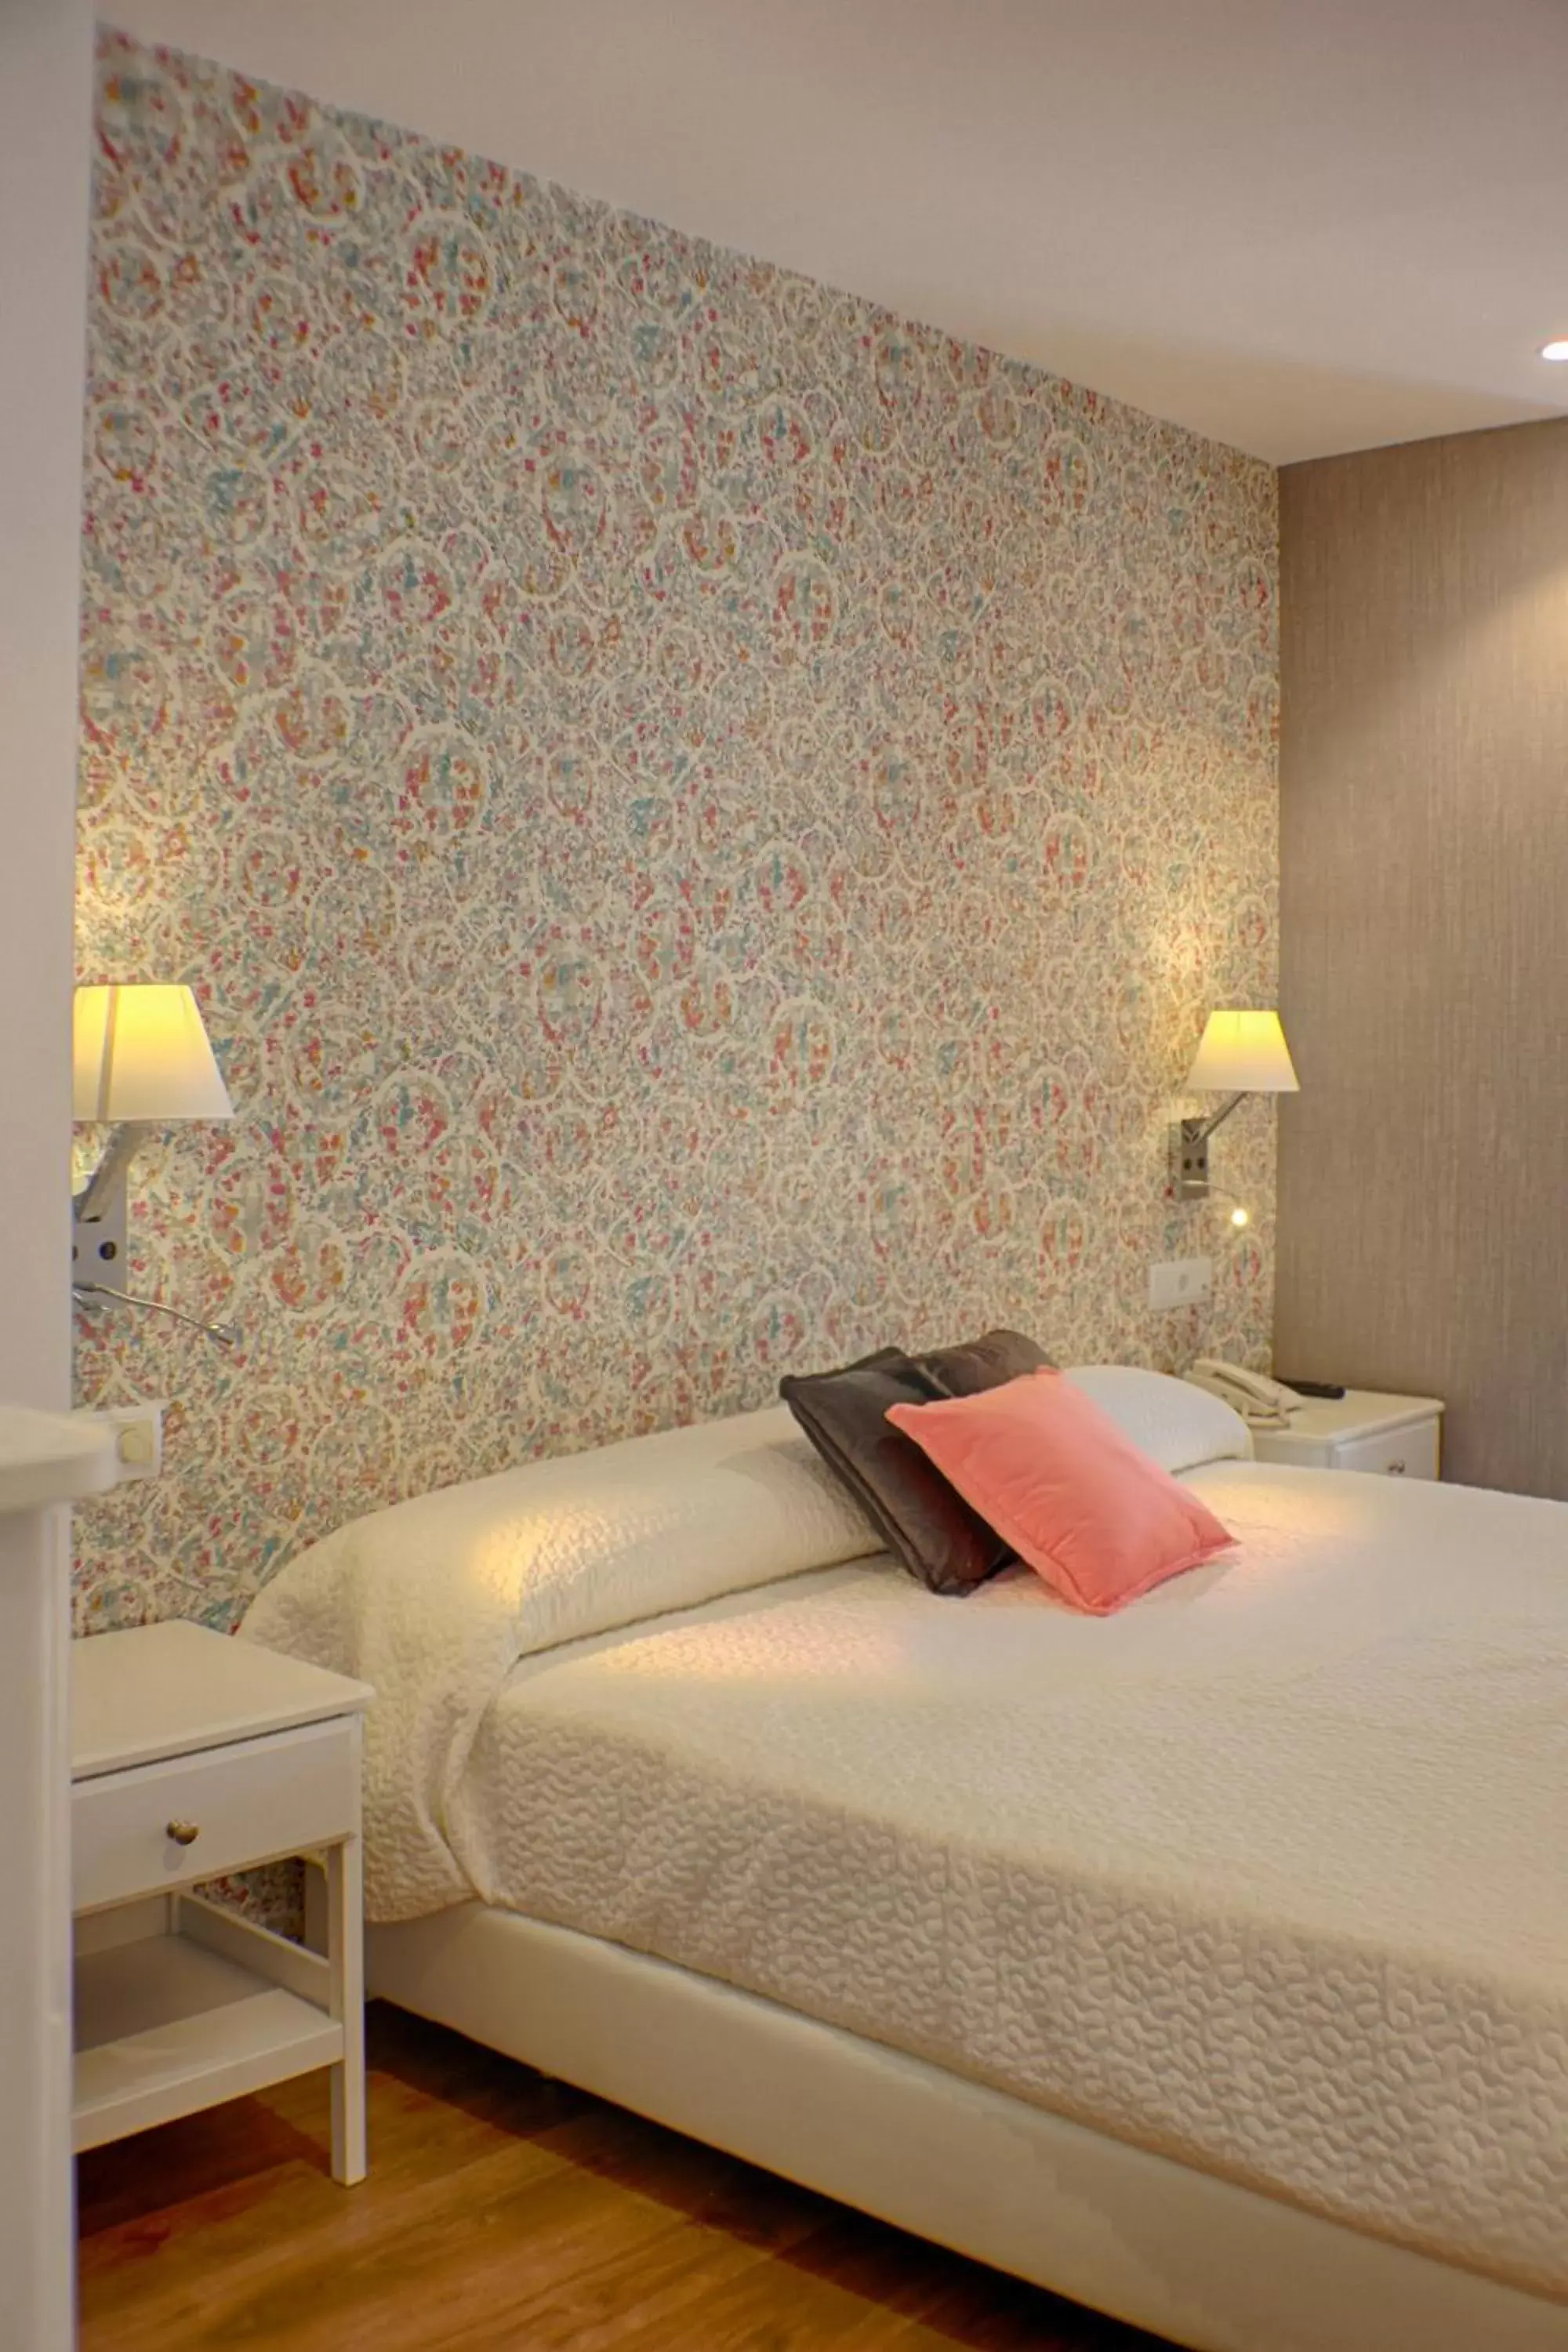 Bedroom, Room Photo in Hotel Malaga Picasso